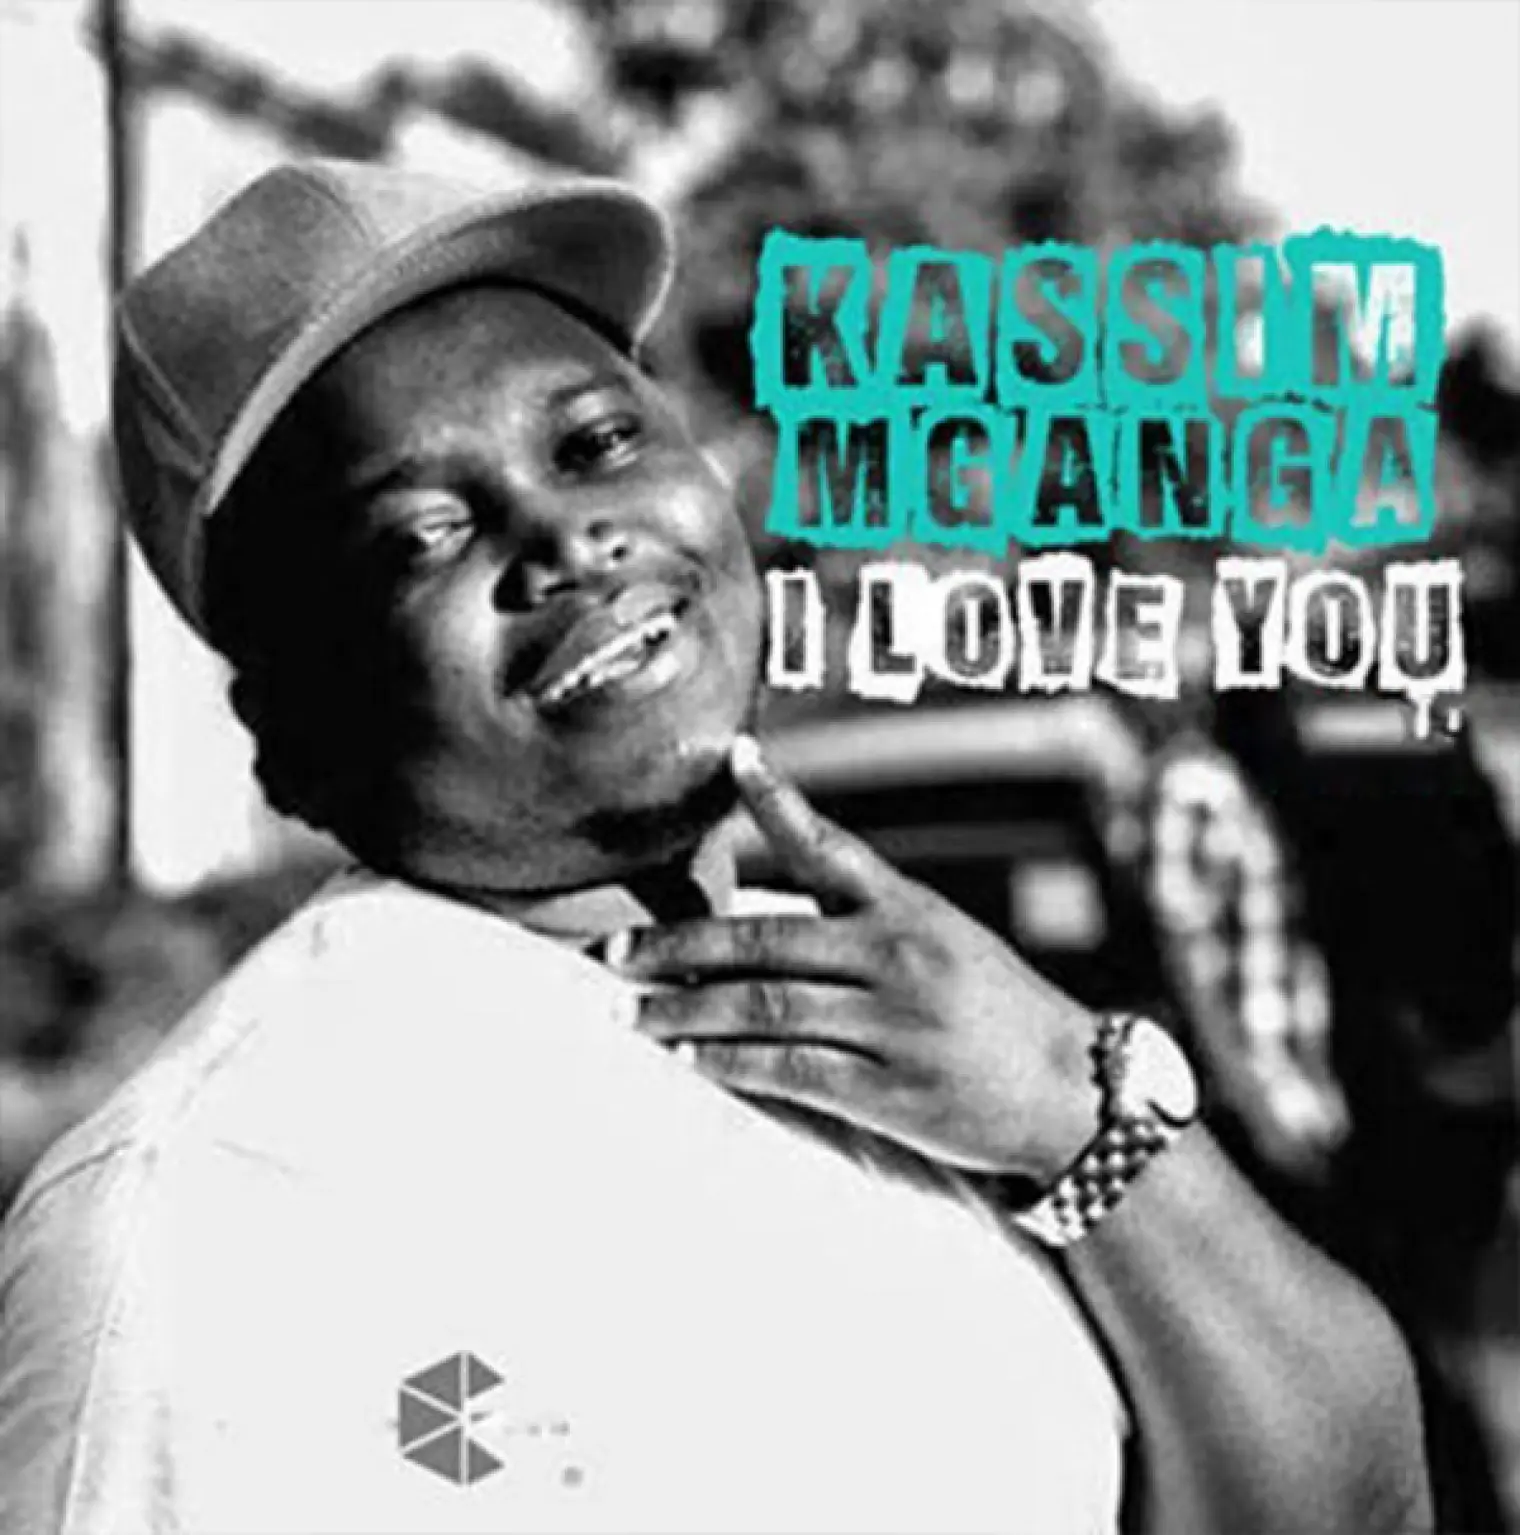 I Love You -  Kassim Mganga  